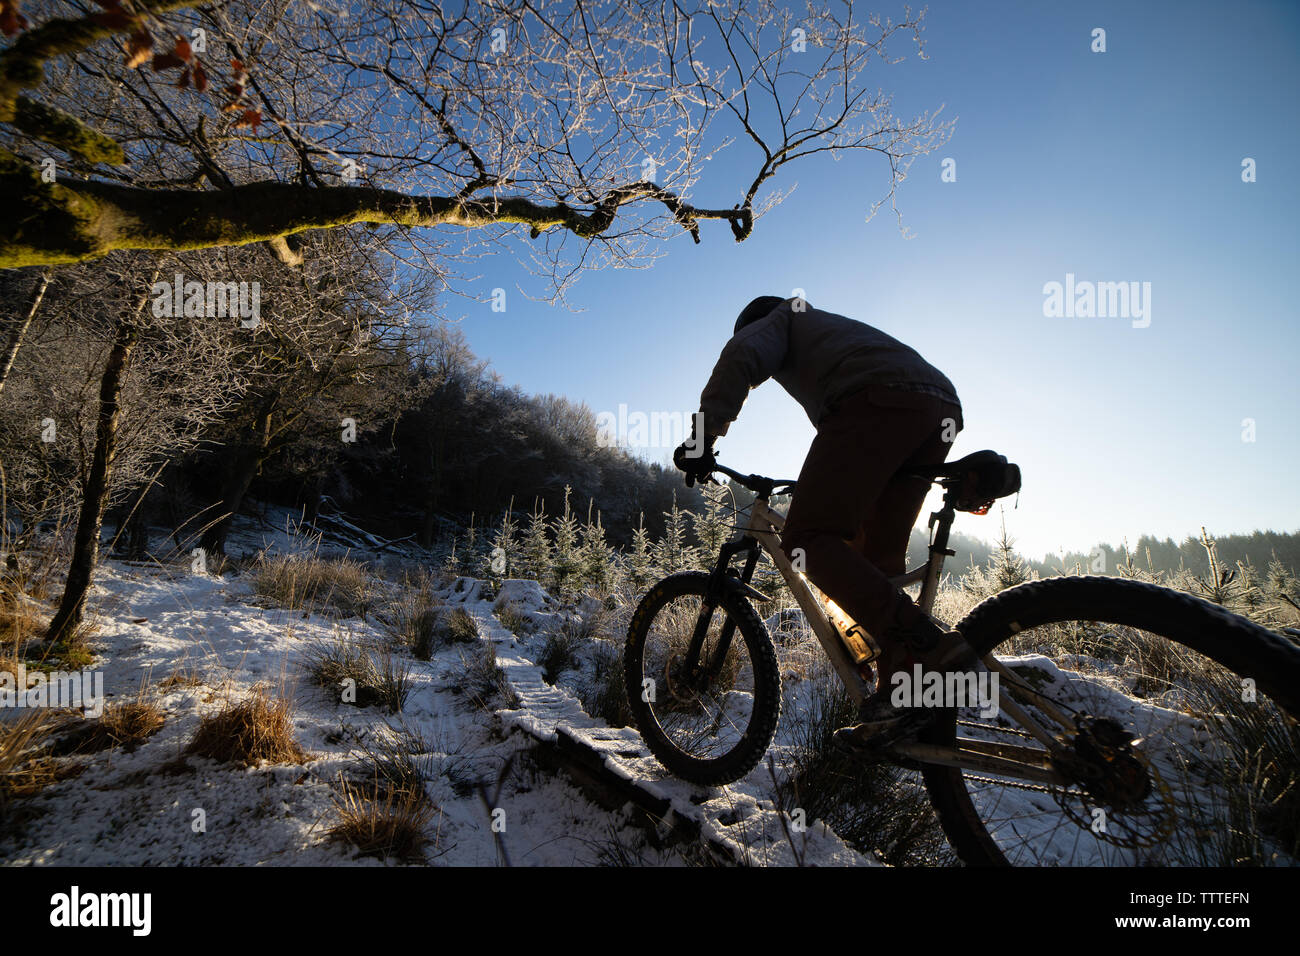 Mountain biker riding across snowy bridge in forest Stock Photo